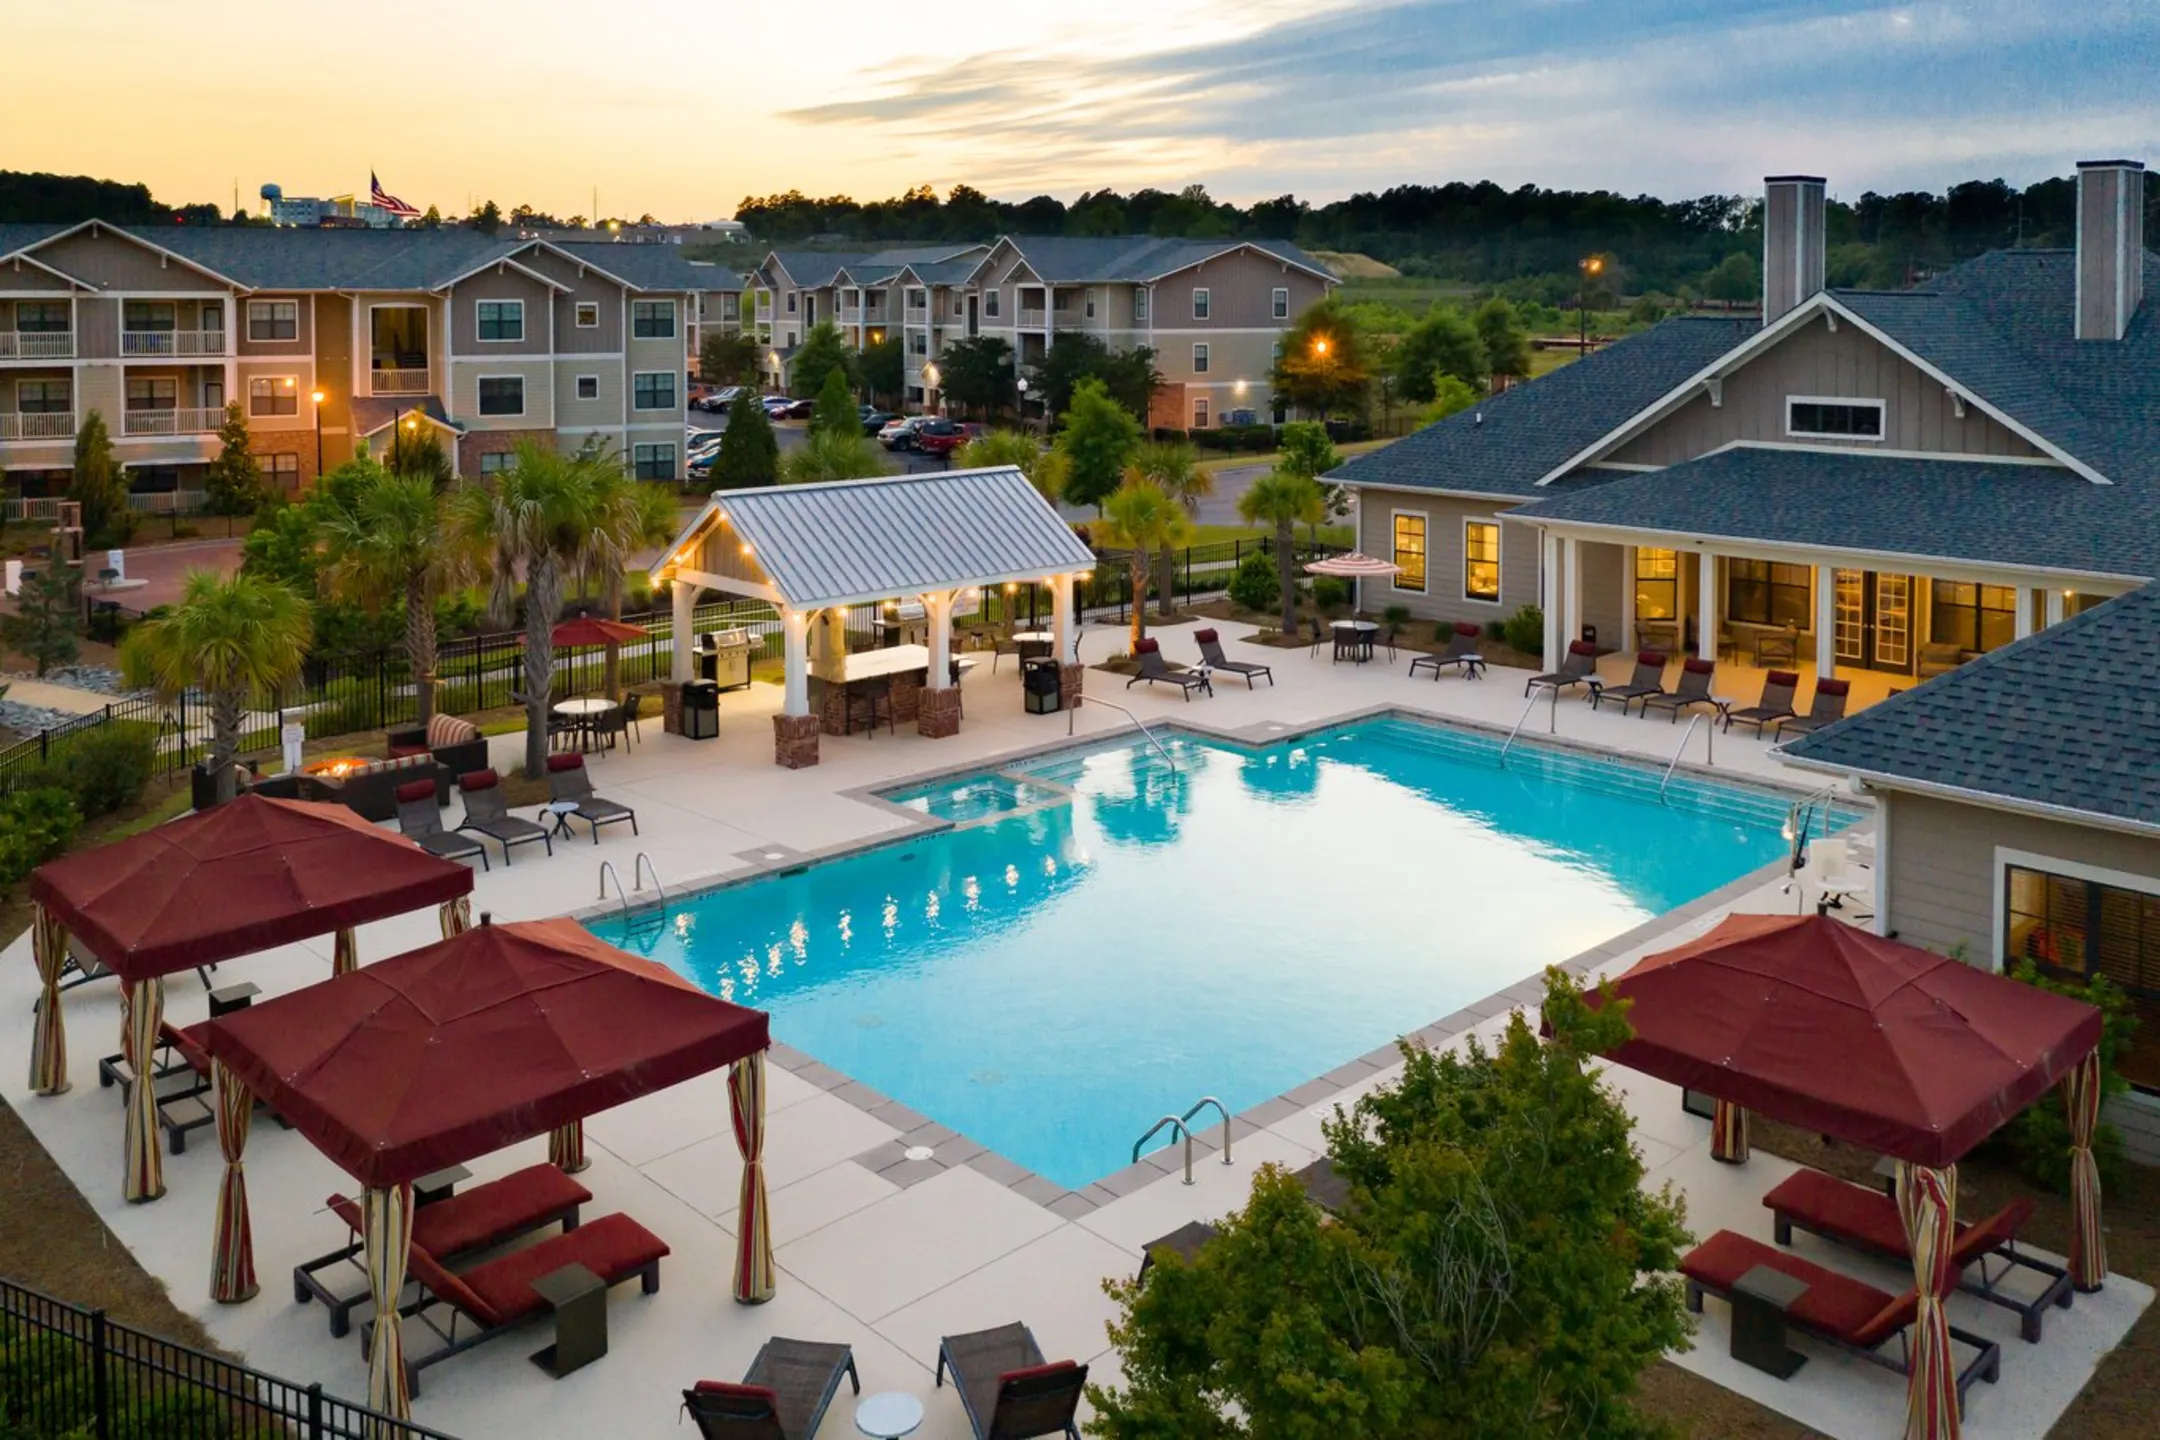 Pool - Gateway Crossing Apartment Homes - Augusta, GA